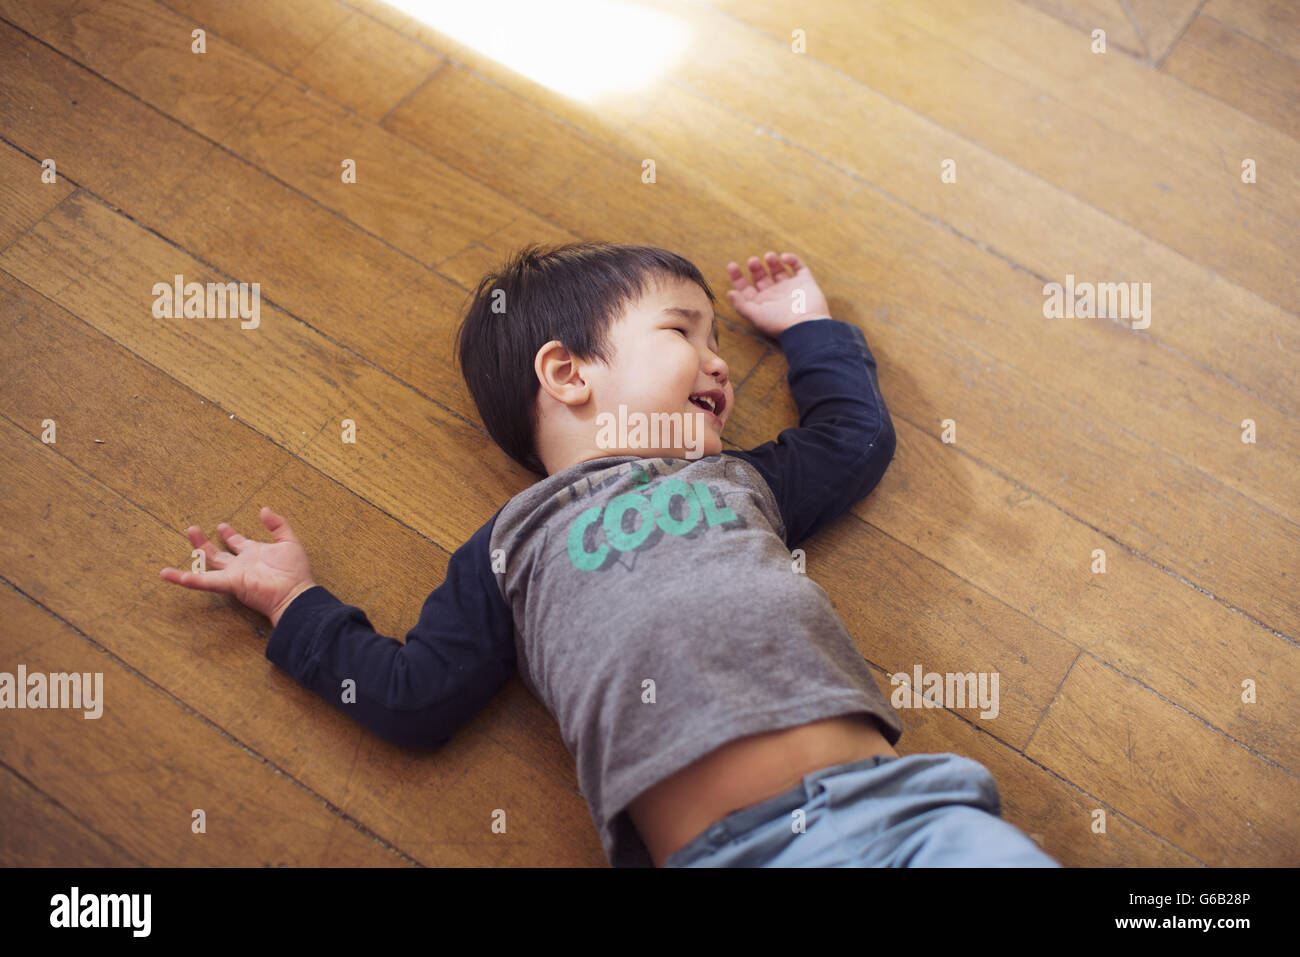 Little boy lying on floor laughing Stock Photo